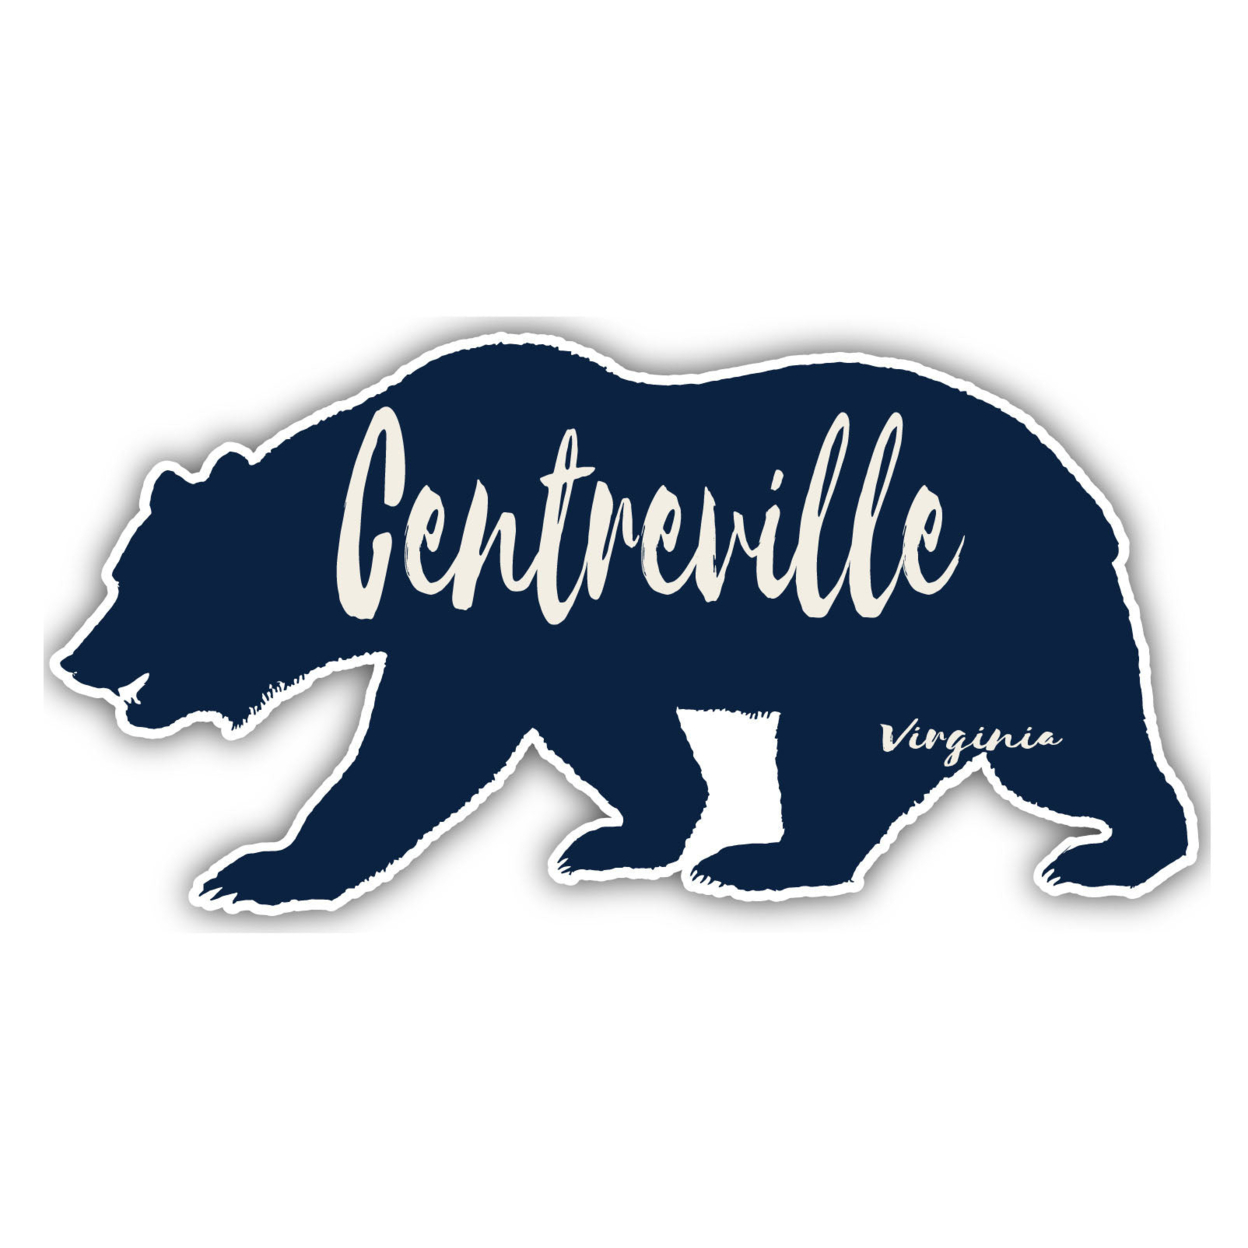 Centreville Virginia Souvenir Decorative Stickers (Choose Theme And Size) - Single Unit, 12-Inch, Bear